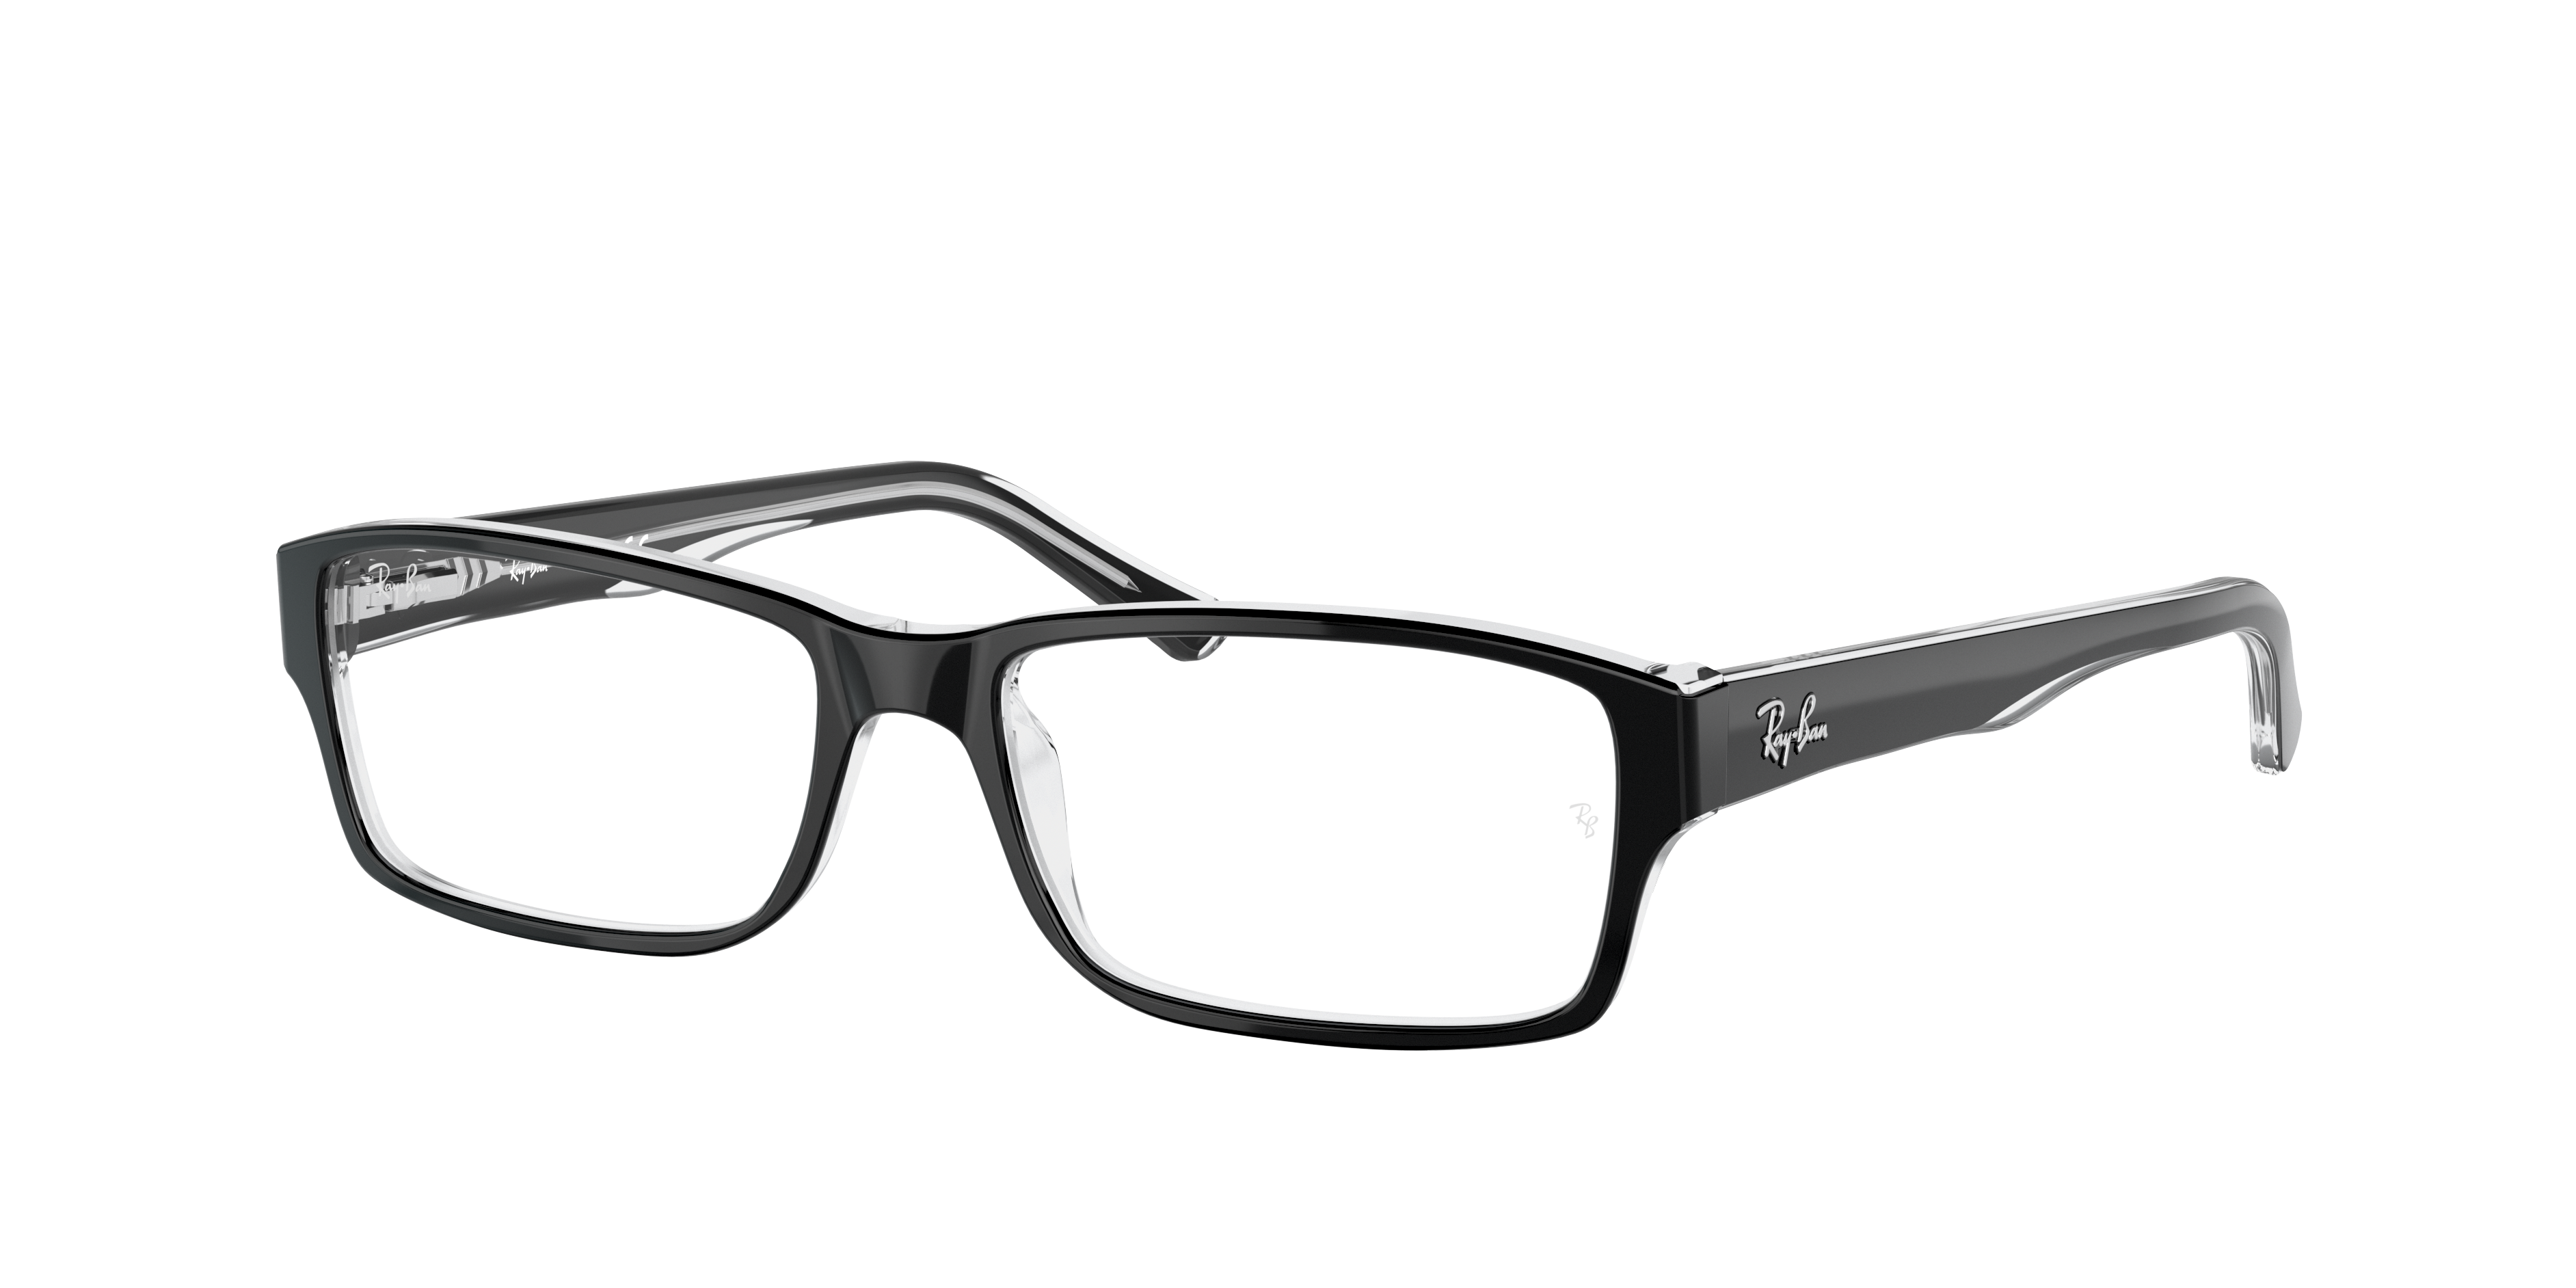 ray ban rx5169 eyeglasses